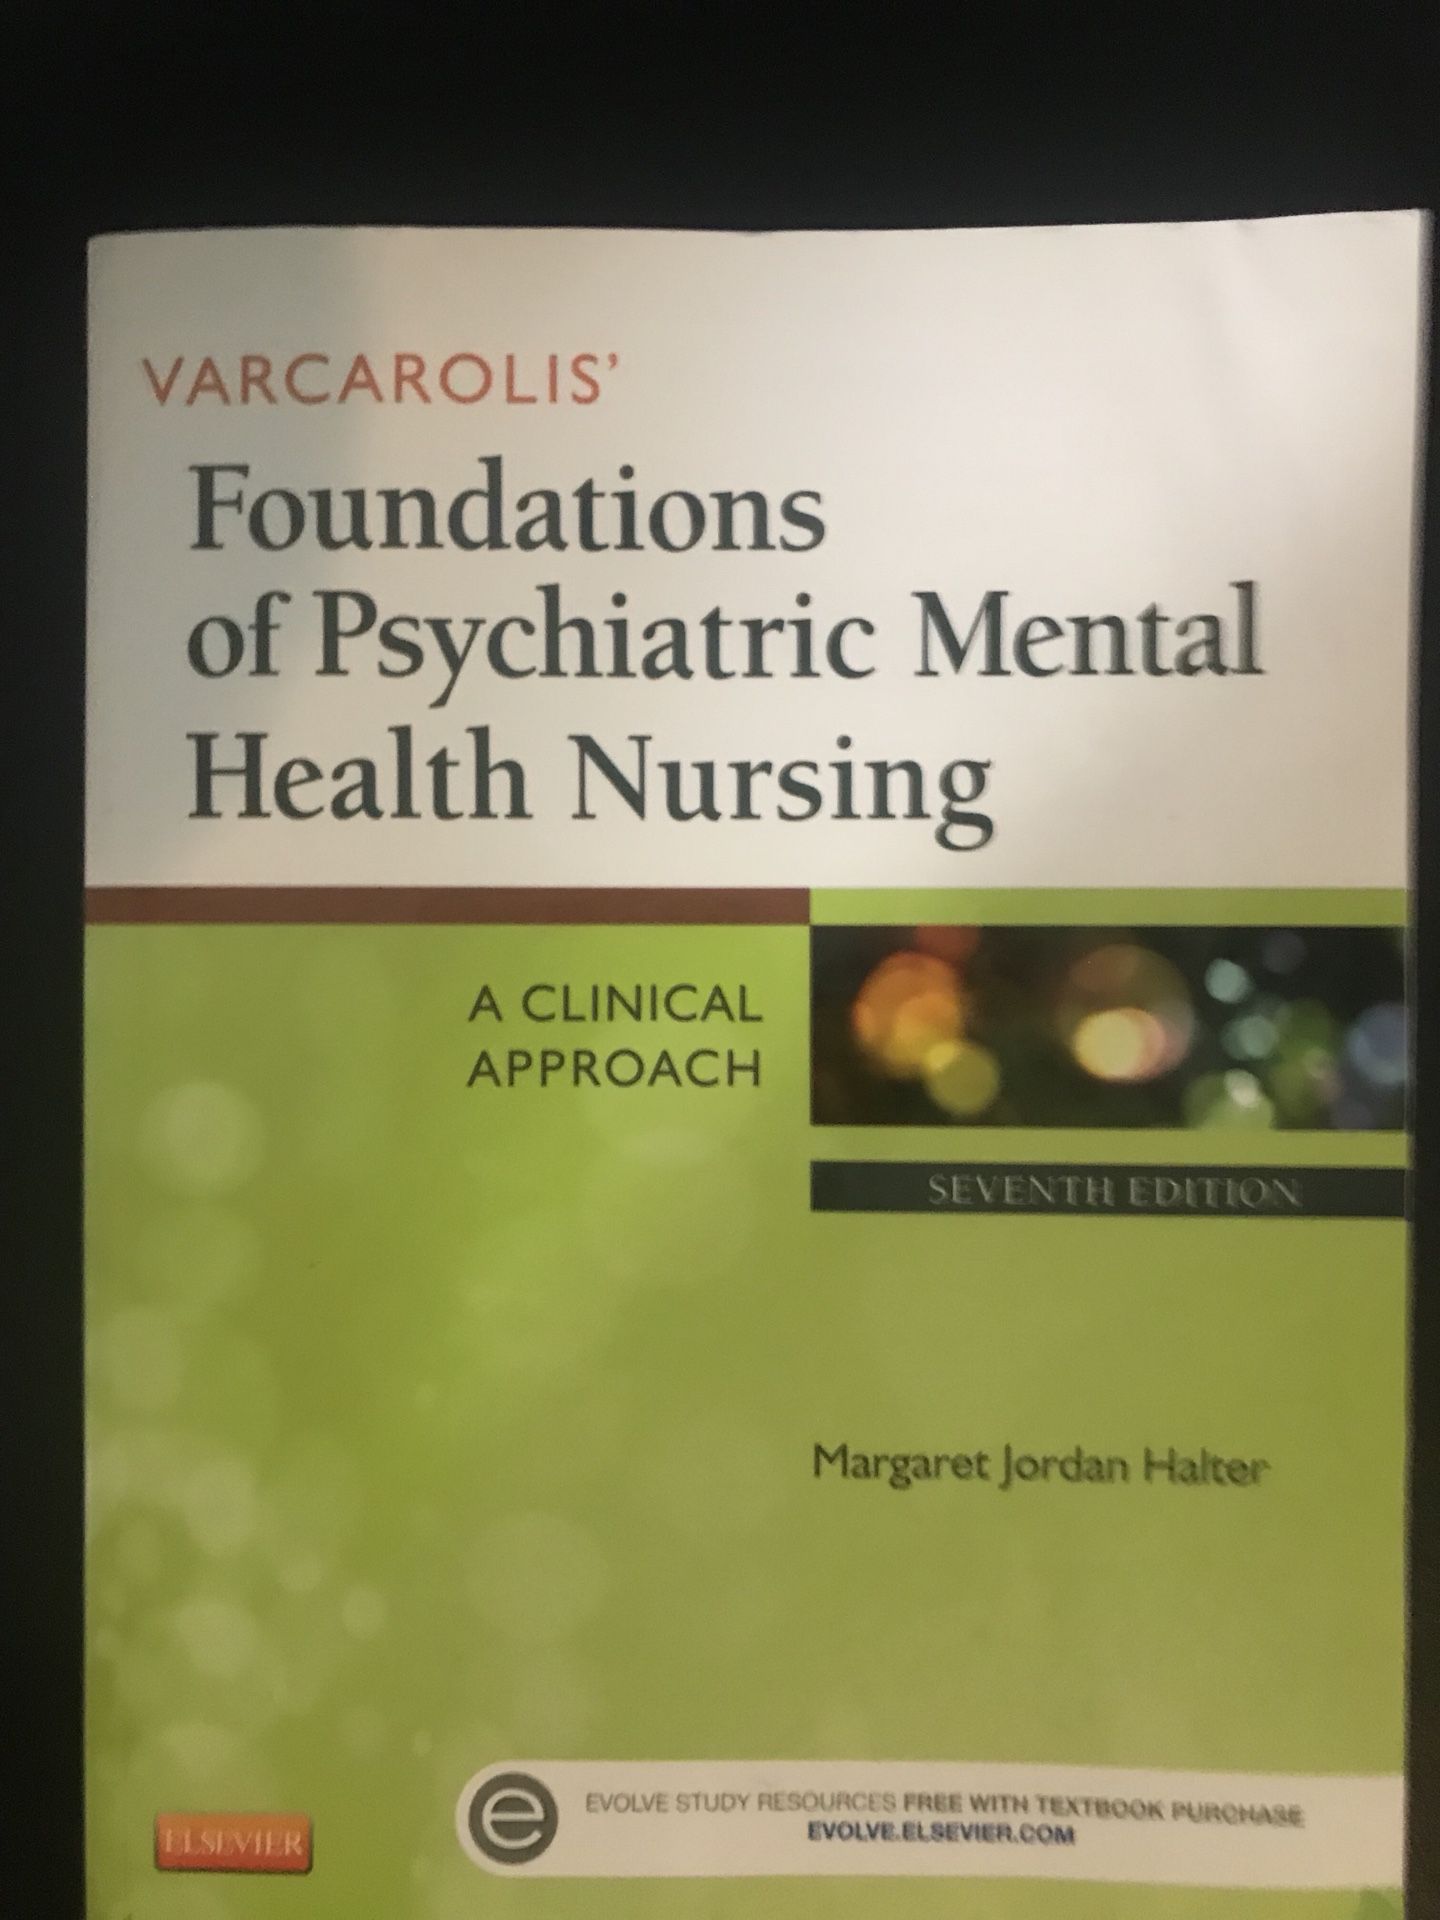 Mental health nursing book